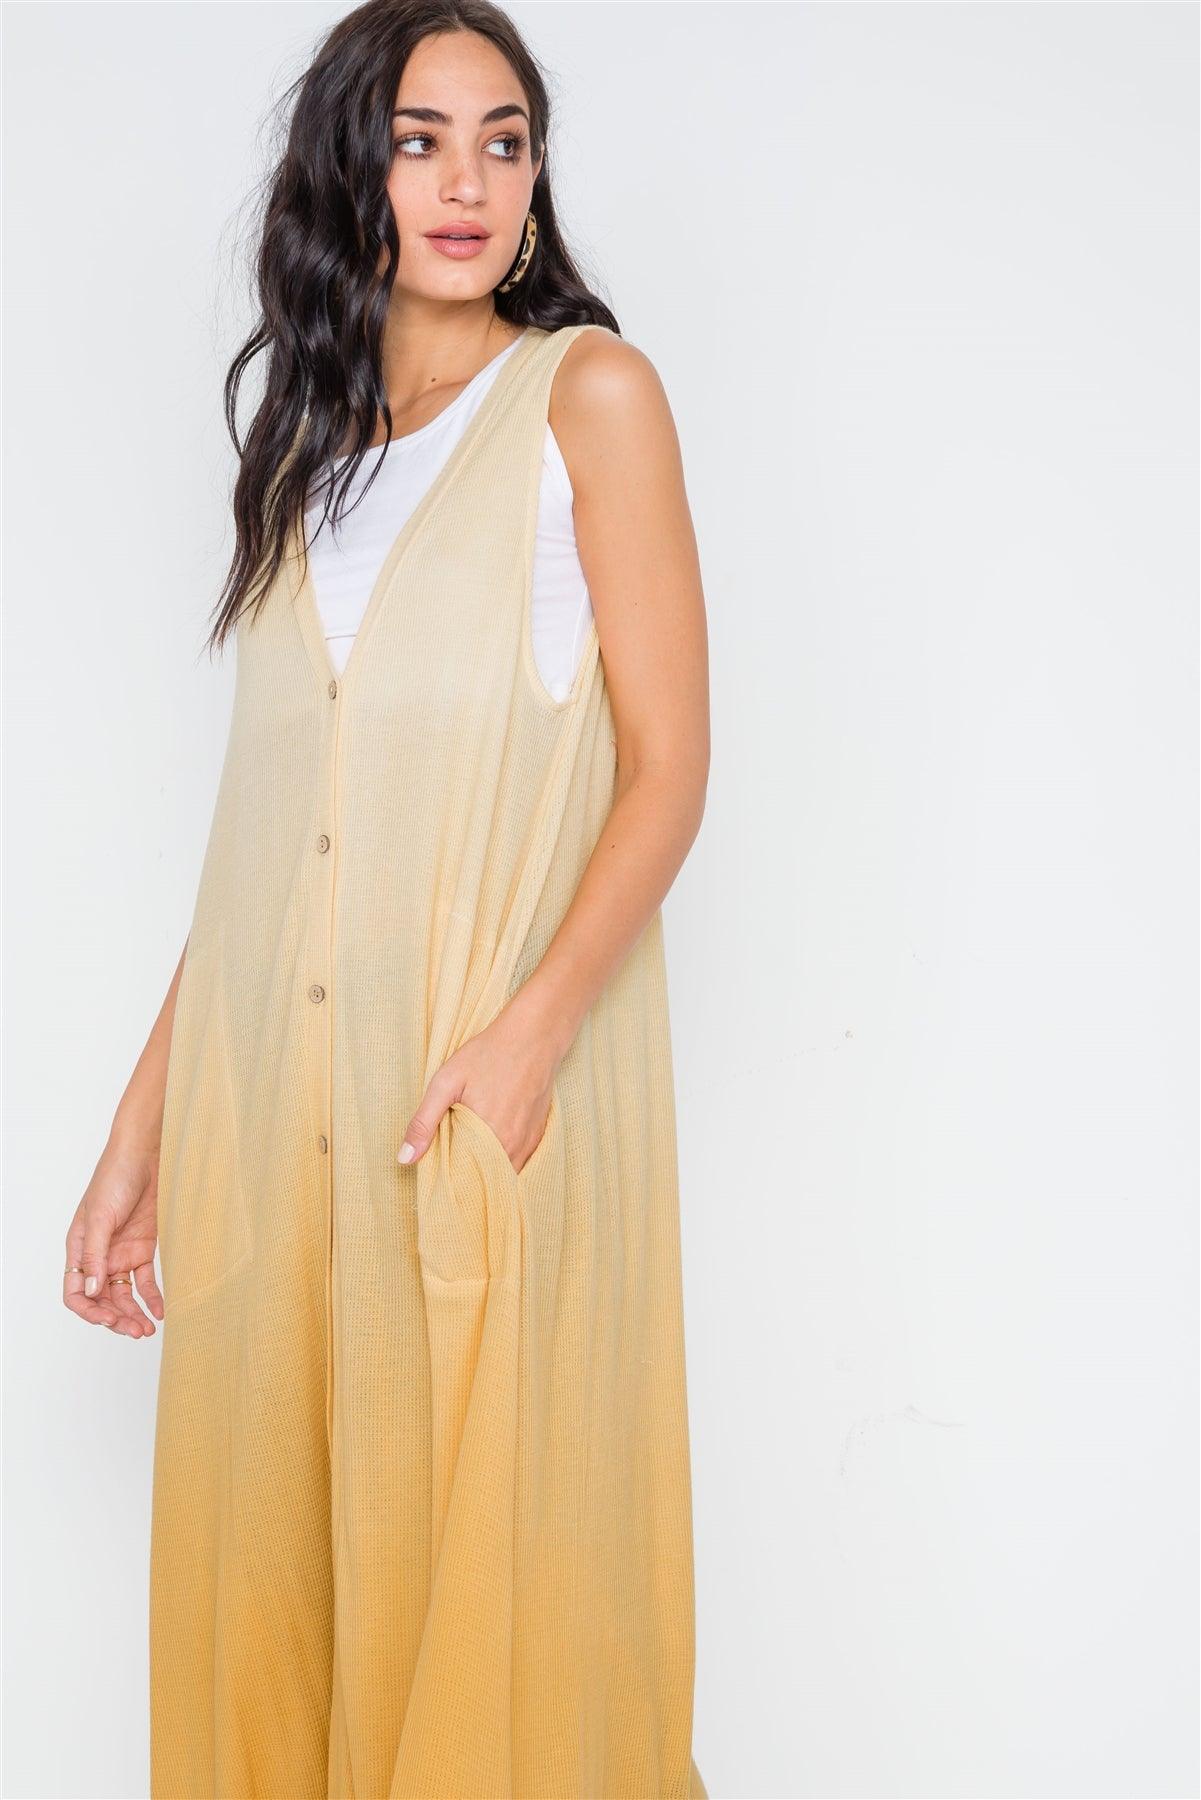 Mustard Ombre Sleeveless Knit Maxi Cardigan Dress /2-2-2